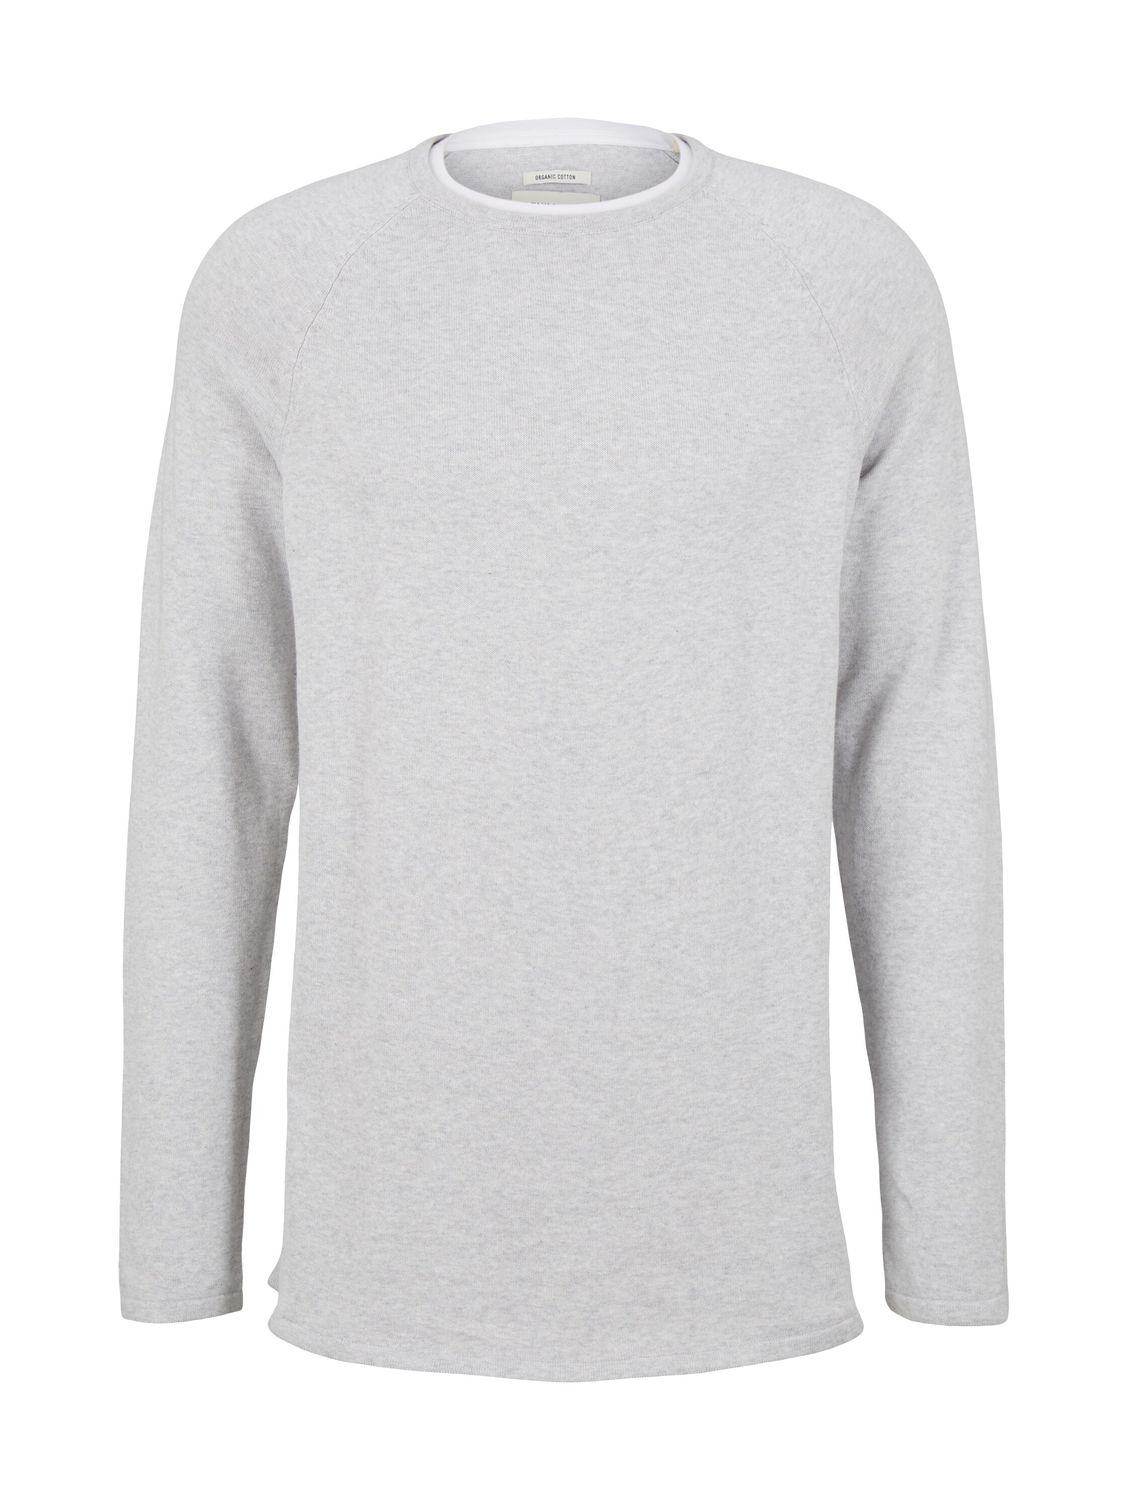 Пуловер TOM TAILOR Denim BASIC, серый худи tom tailor размер m серый